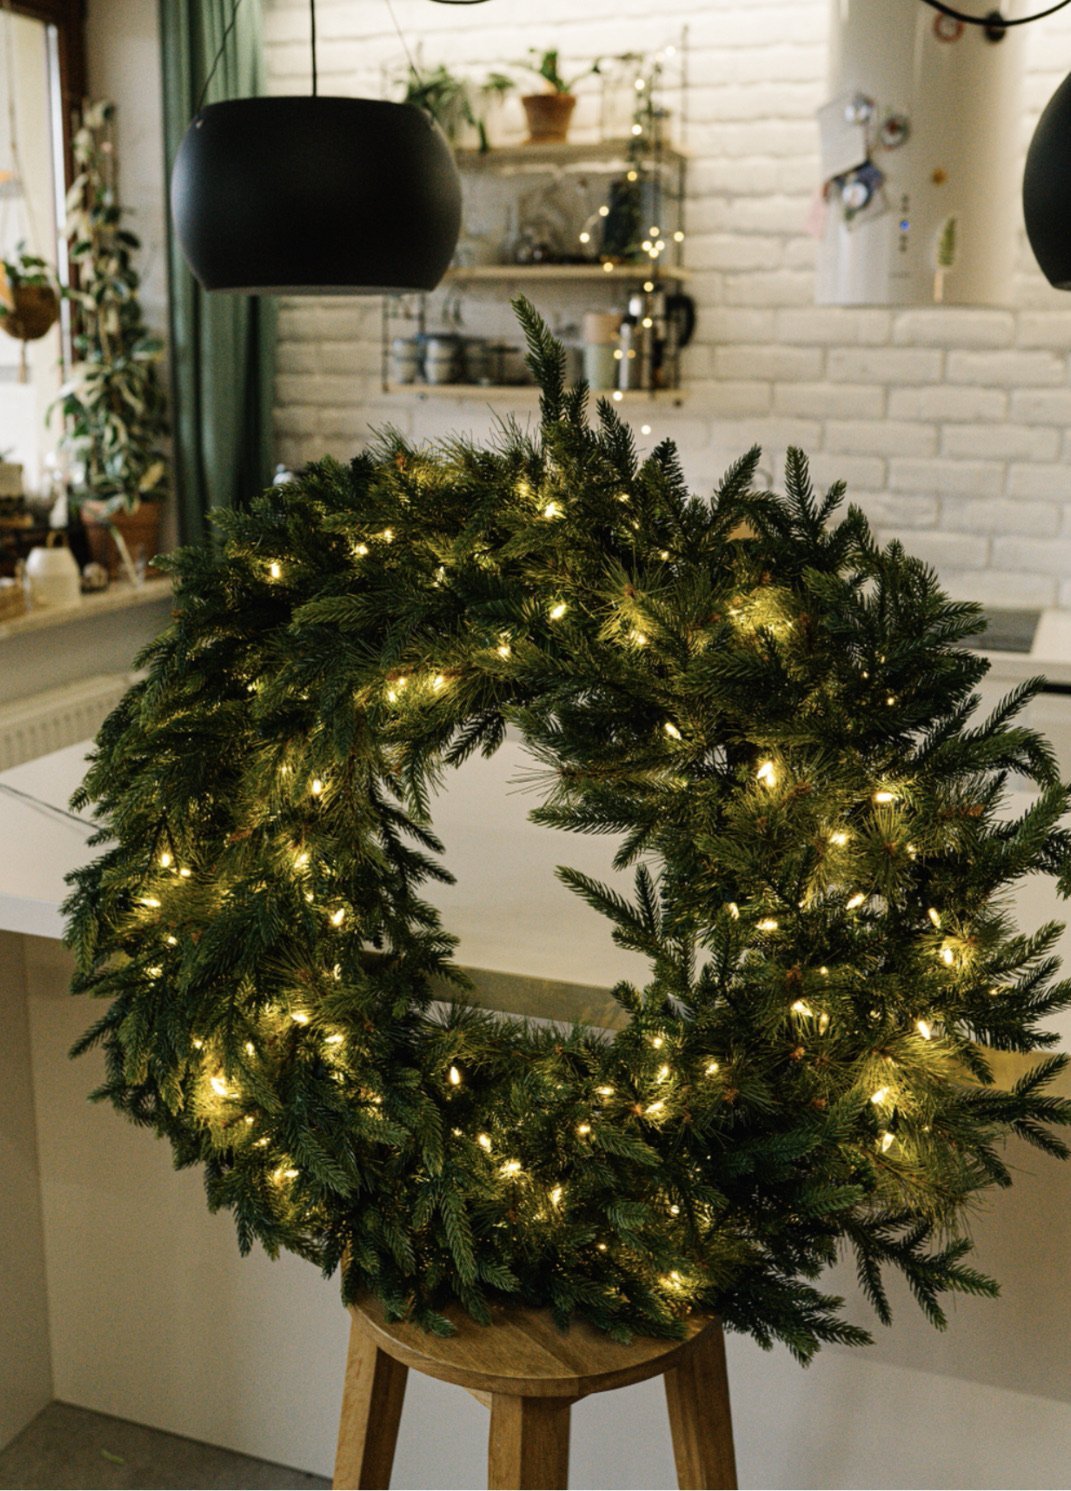 Huge Christmas Green Wreath with Grande lights